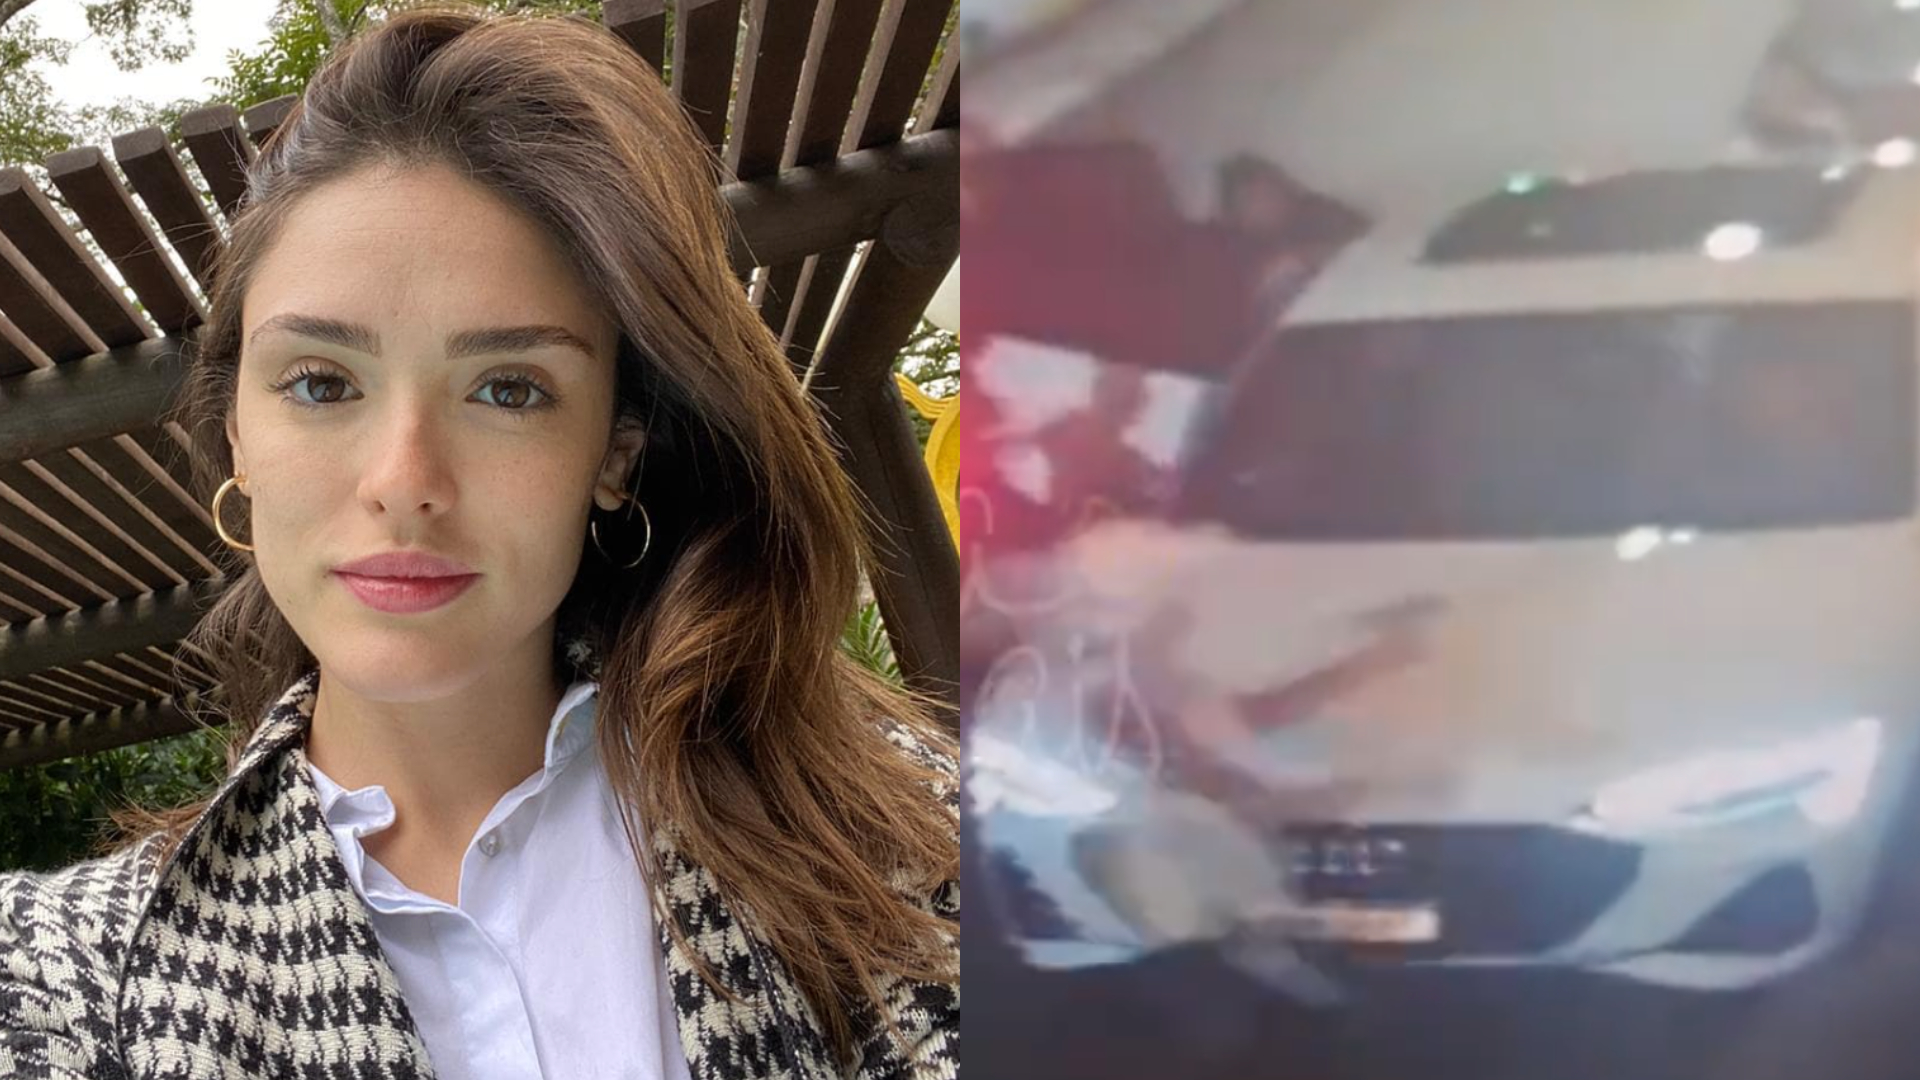 Vídeo mostra momento em que carro de Isabelle Drummond é assaltado no Rio de Janeiro